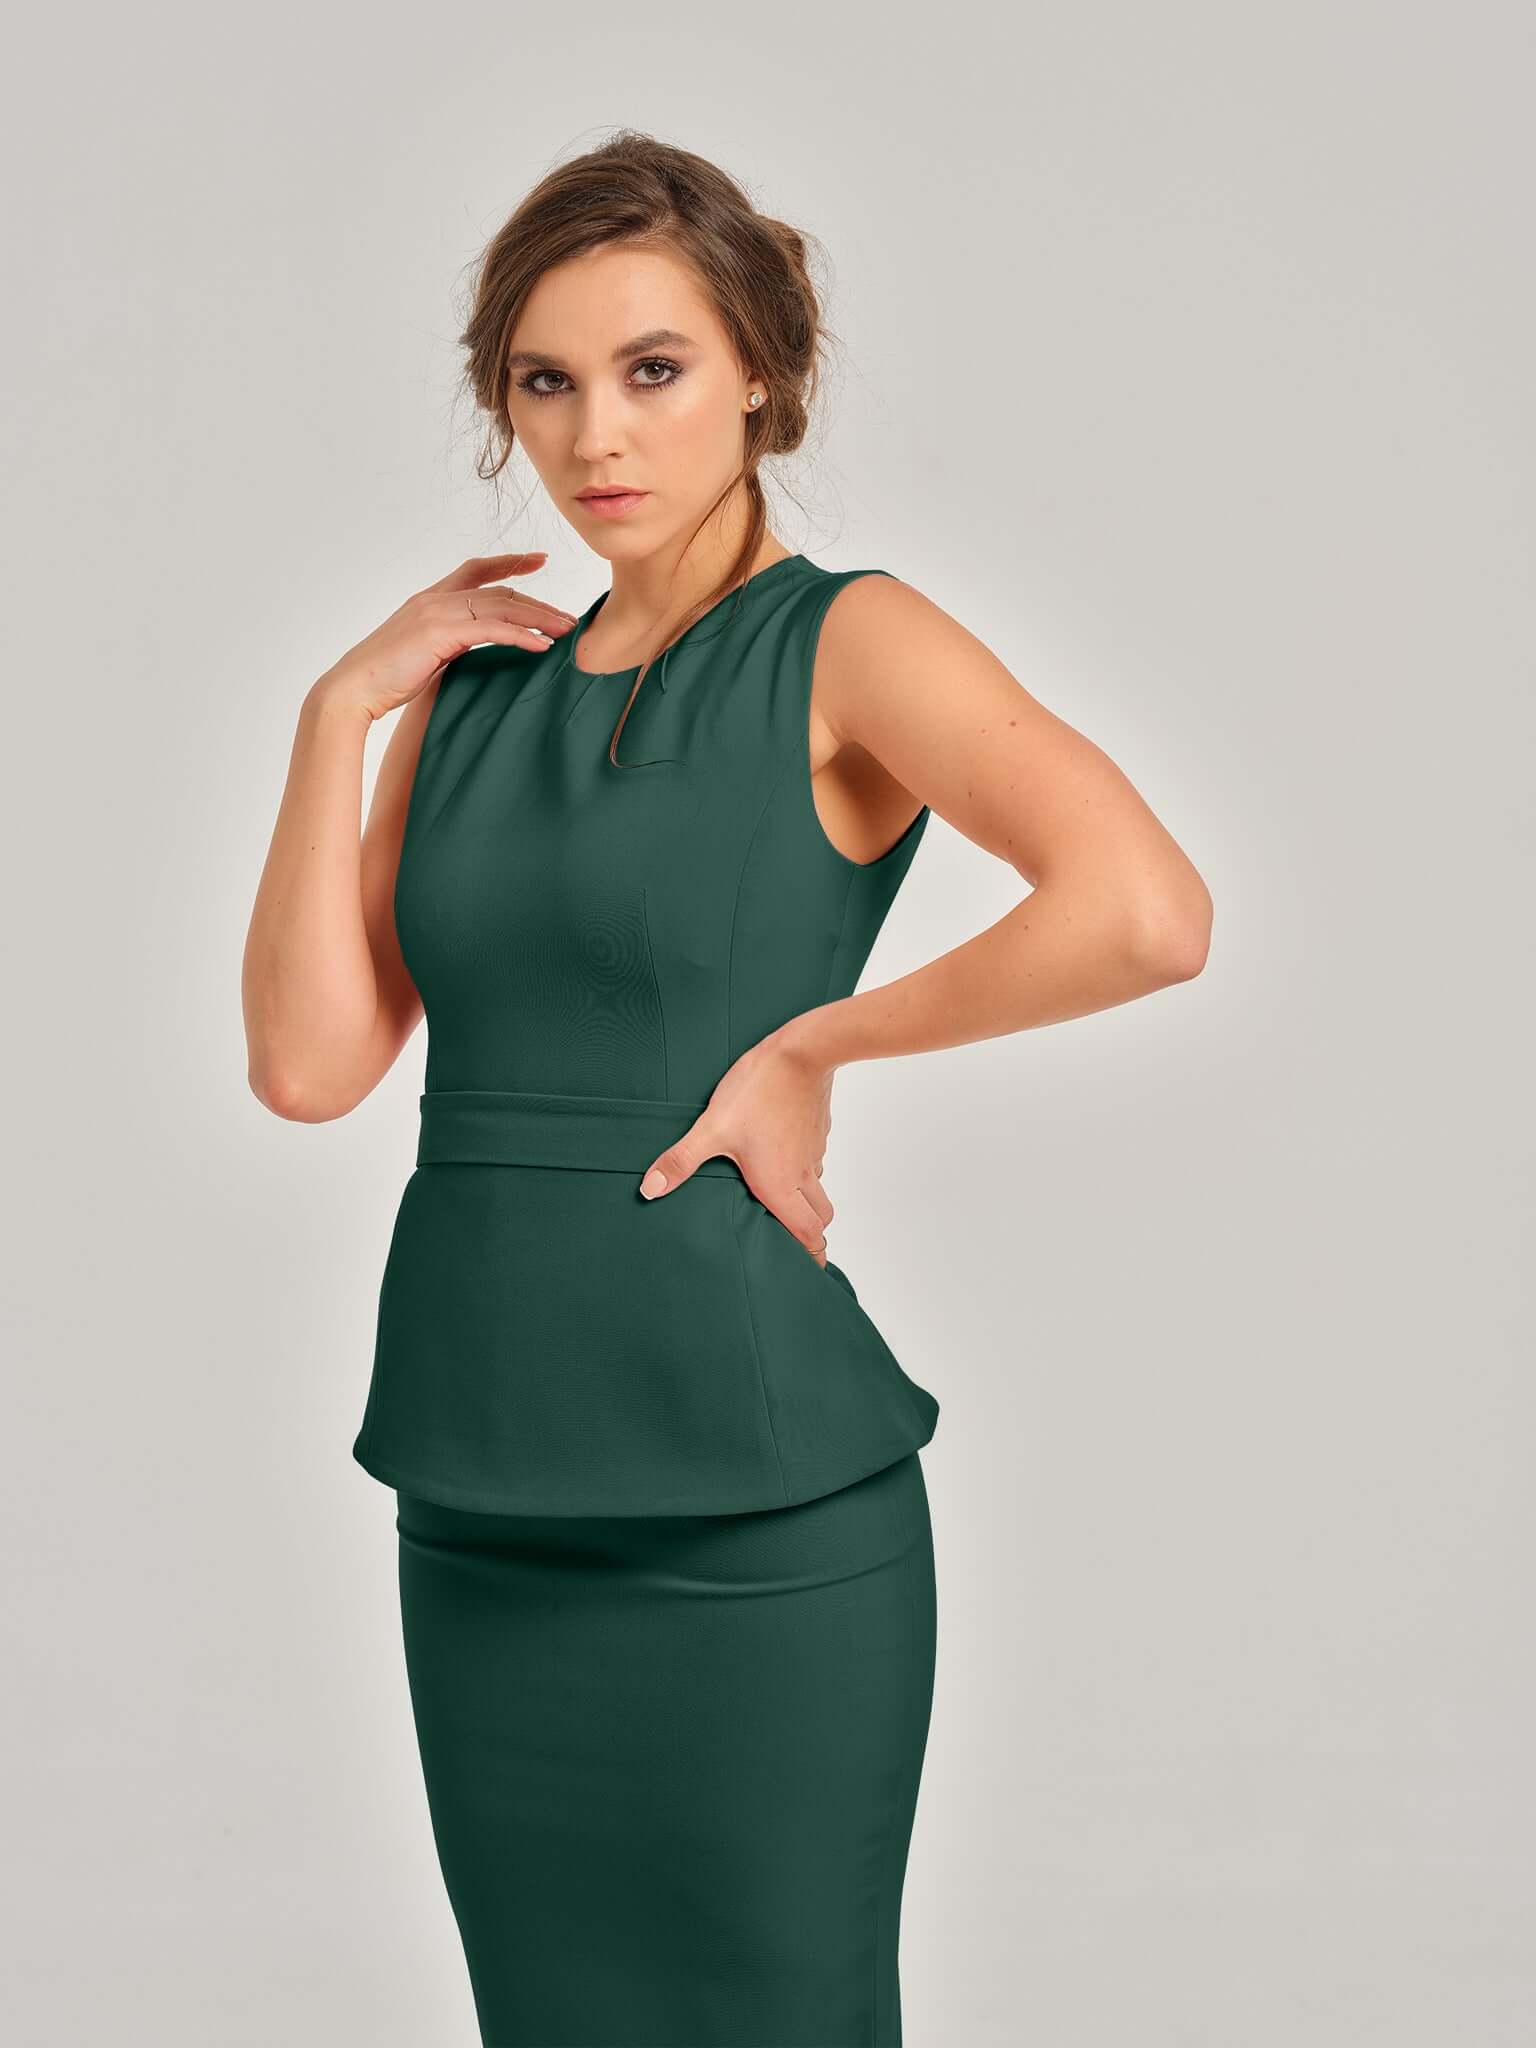 Emerald Dream Sleeveless Waist-Fitted Top by Tia Dorraine Women's Luxury Fashion Designer Clothing Brand